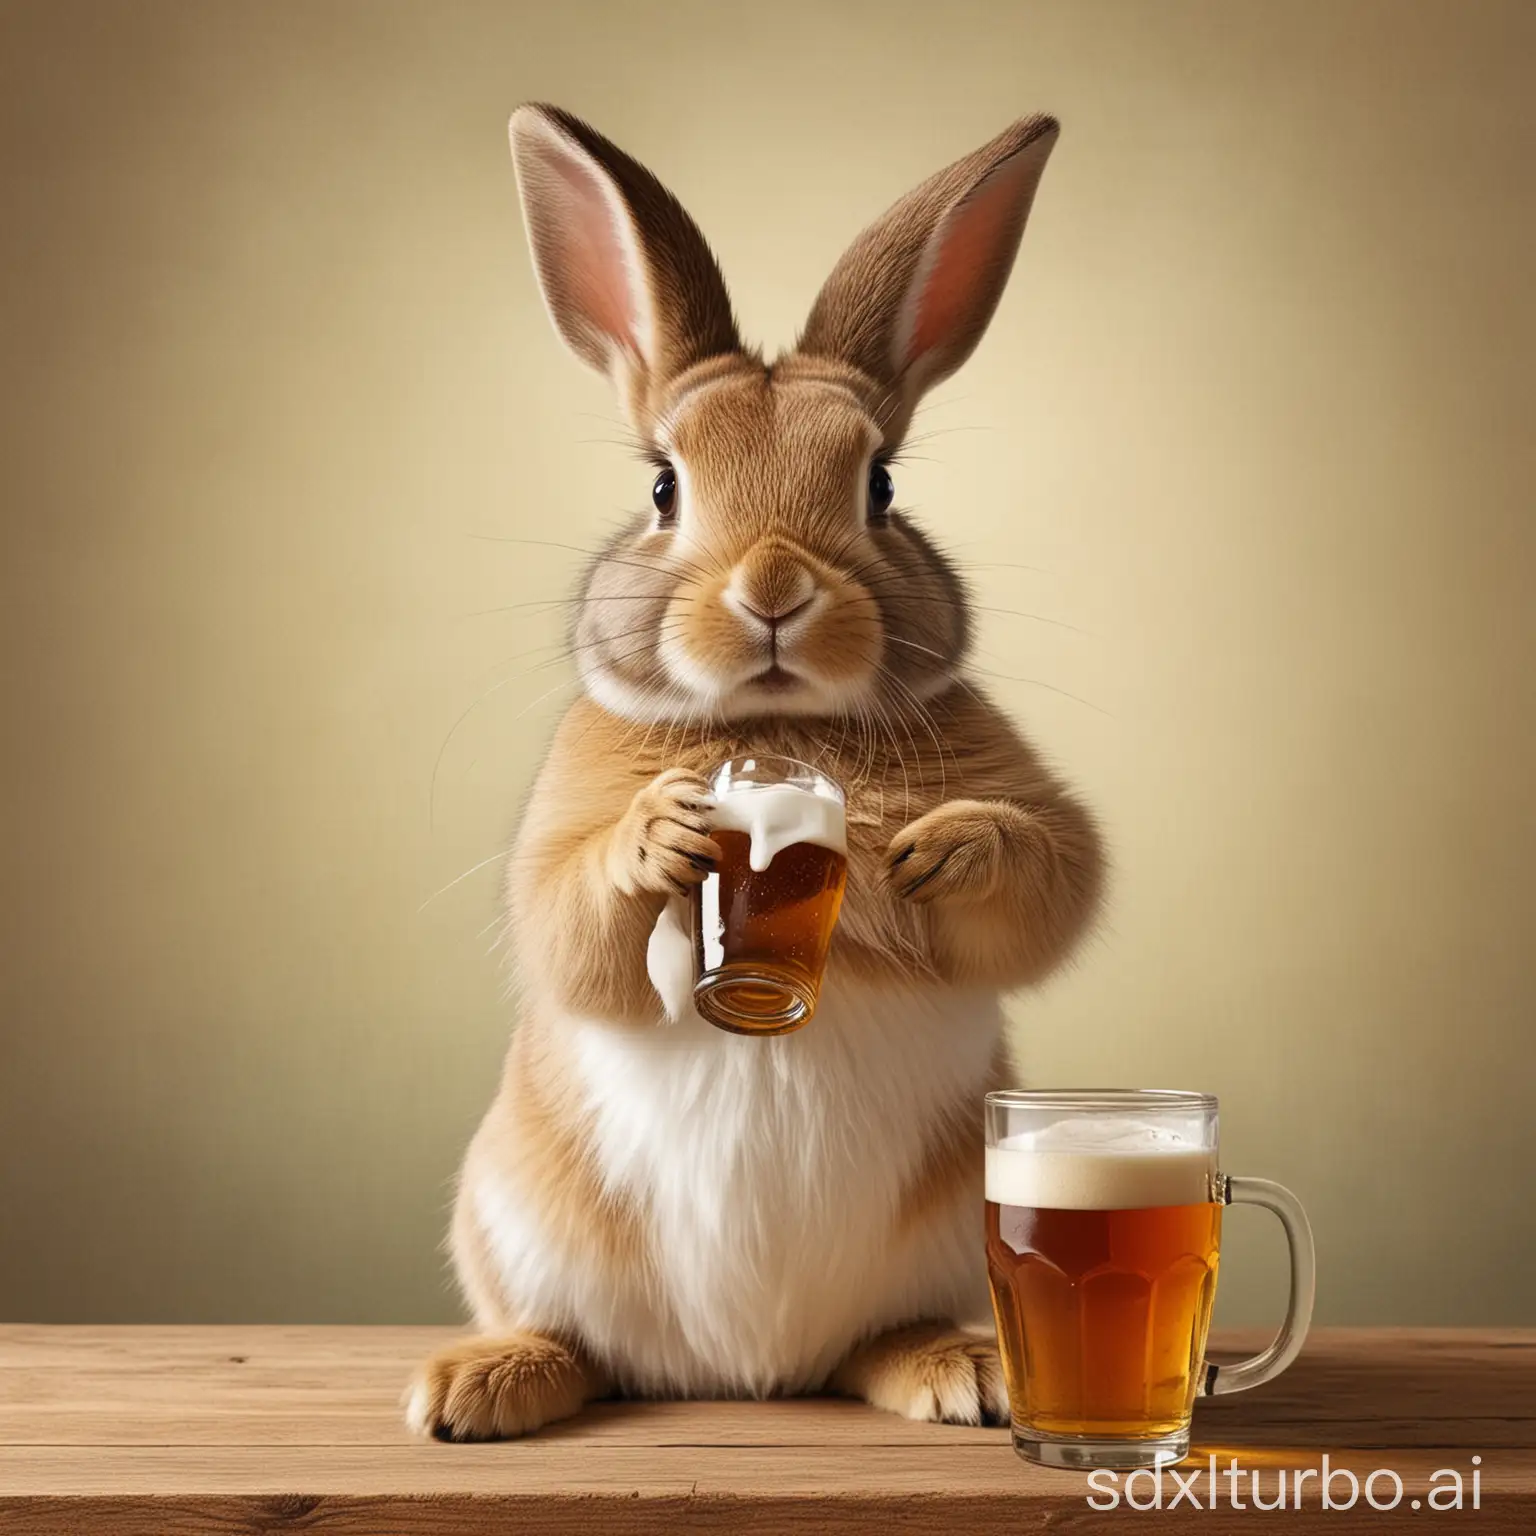 Cute-Bunny-Enjoying-a-Relaxing-Beer-Moment